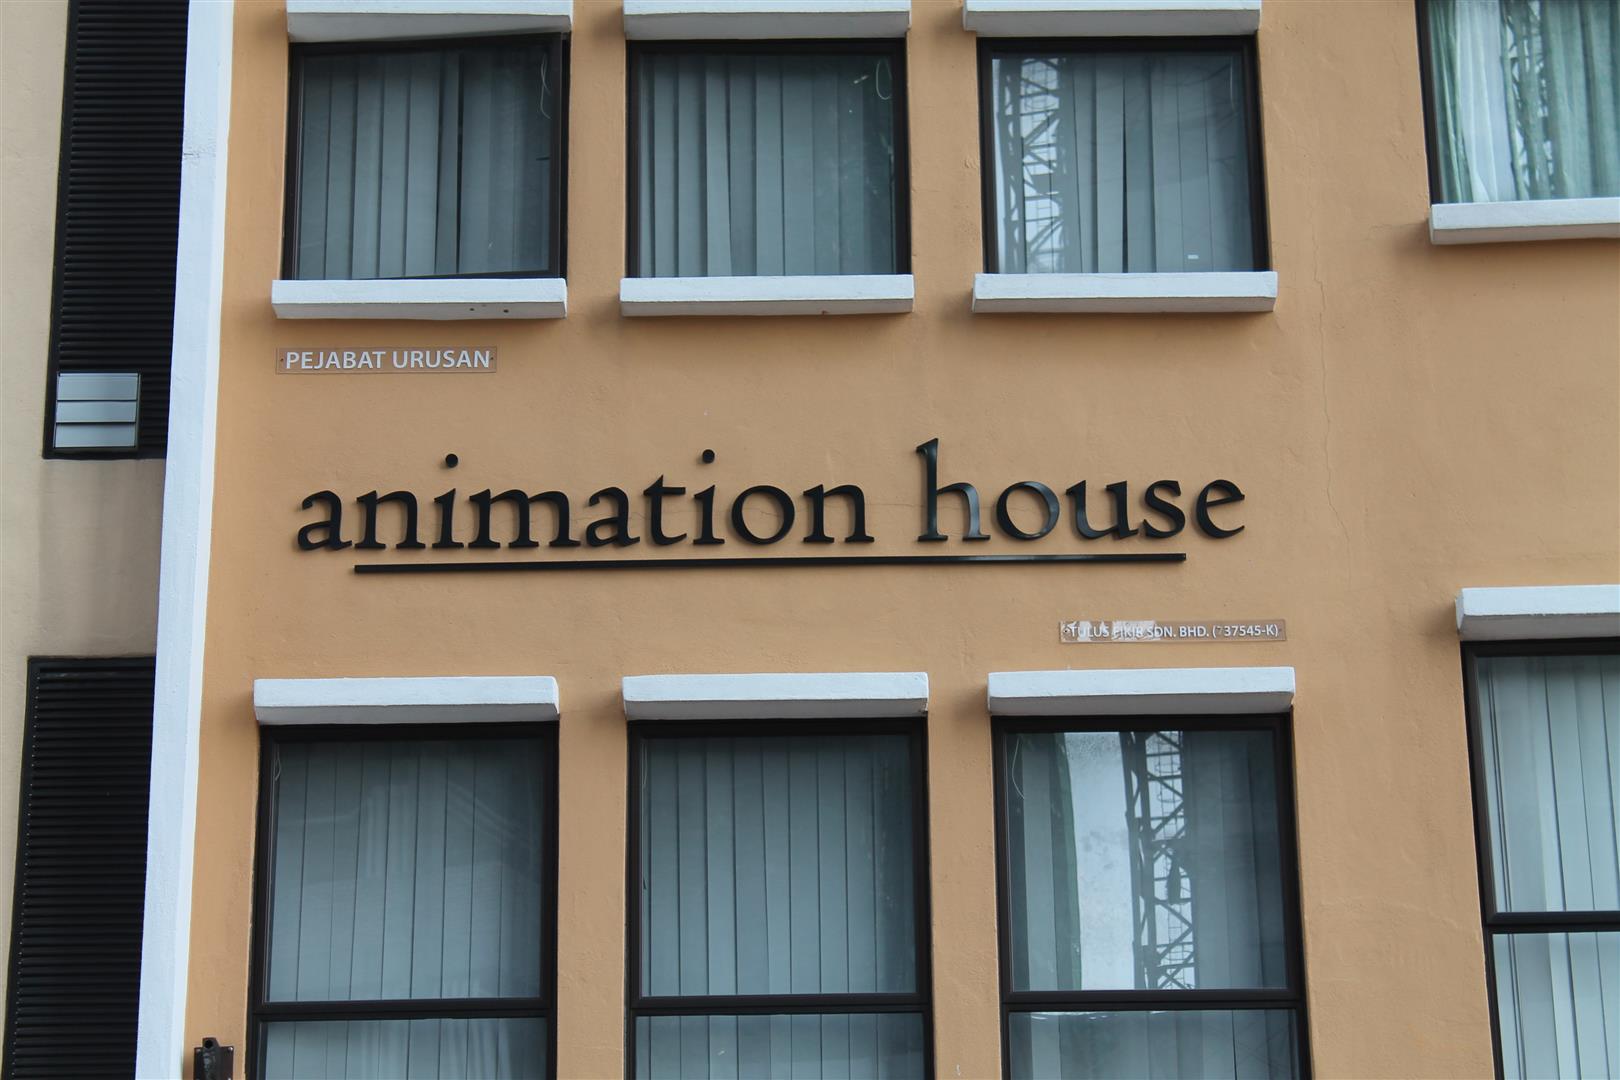 Tulus Fikir - Visit to Local Animation Company 31